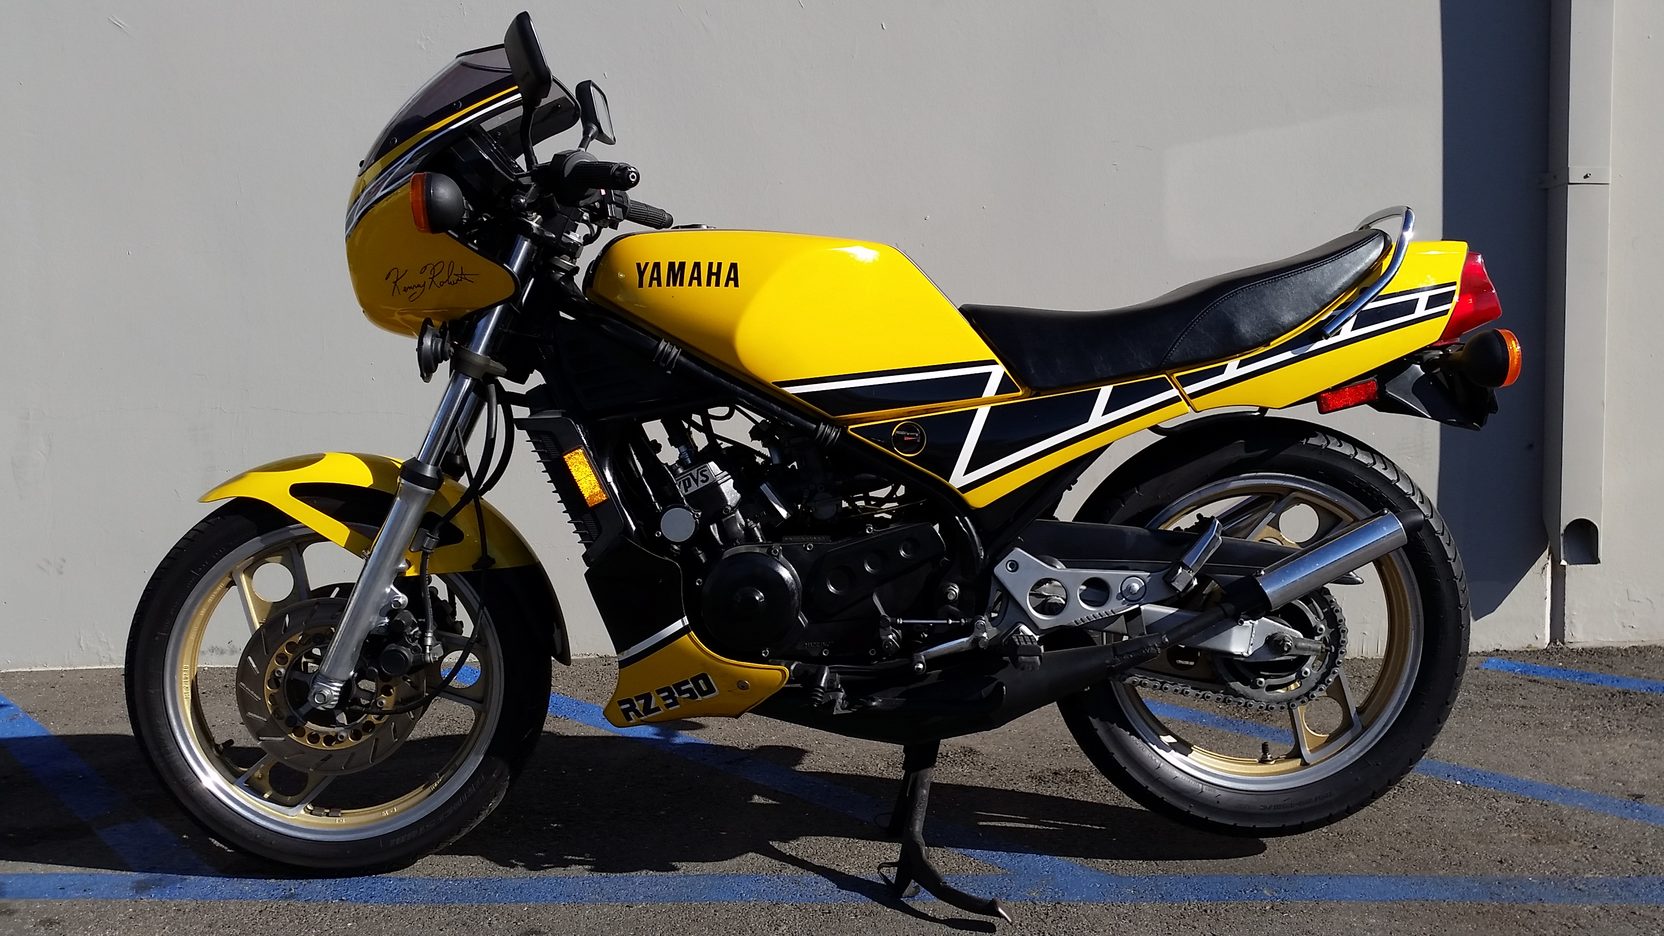 Yamaha Rz350 Wallpapers